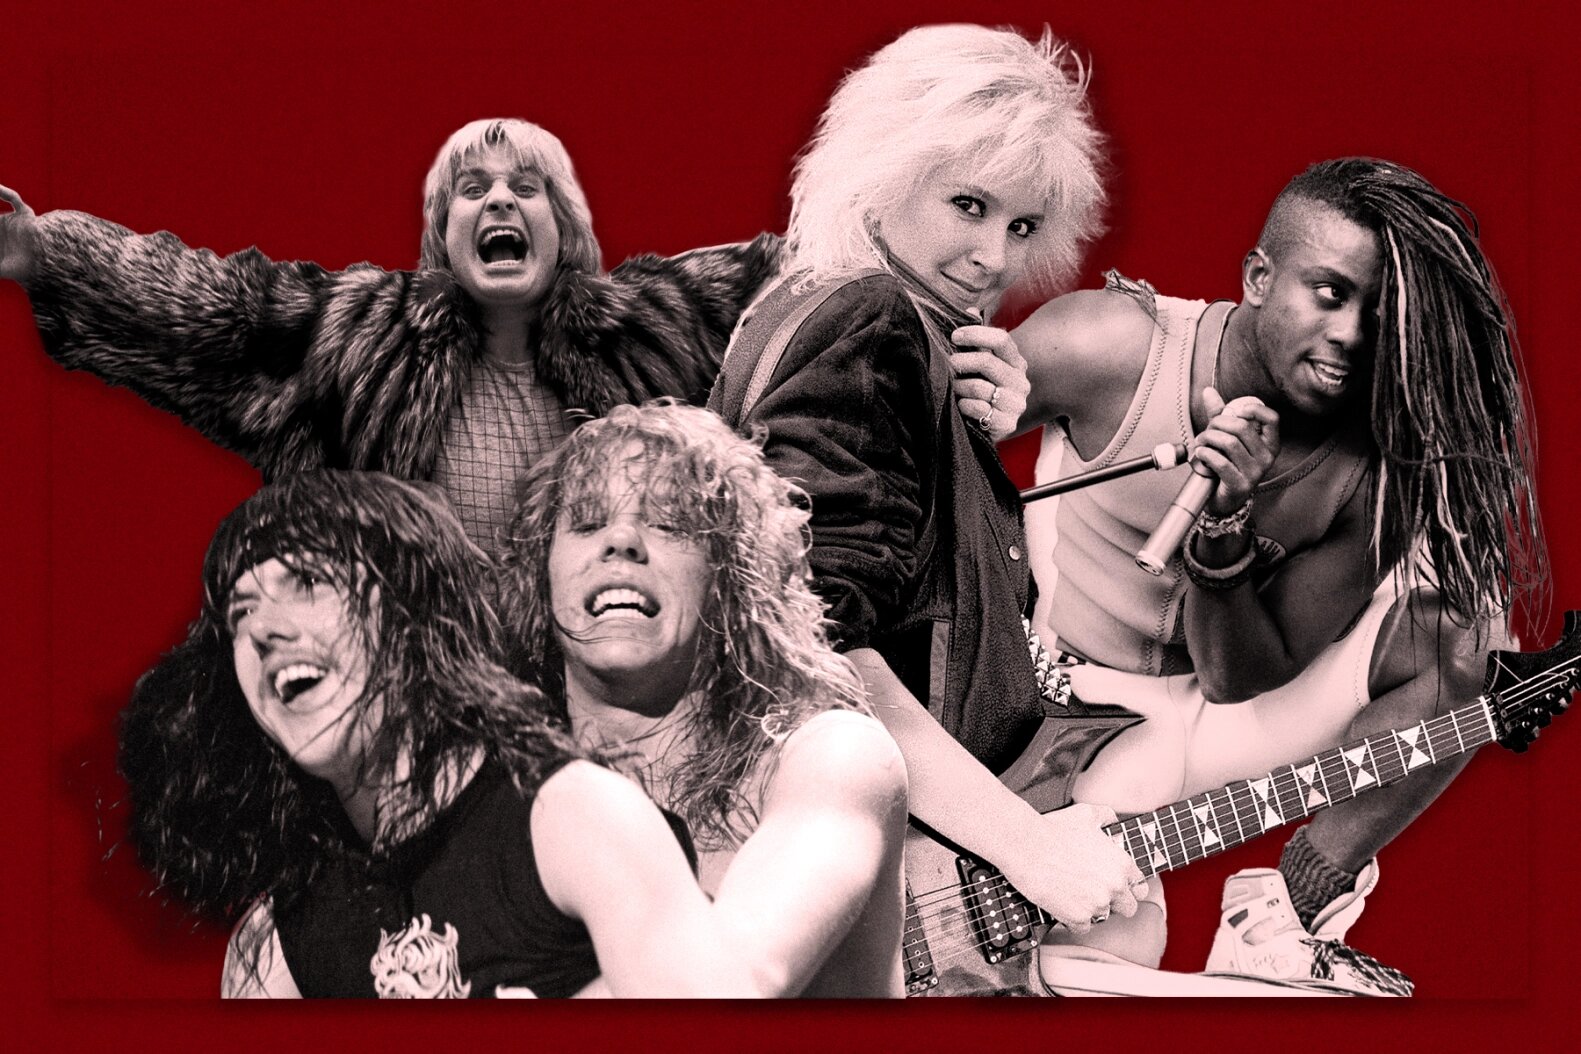 Judas Priest 50 Heavy Metal Years – Evoke Candle Co